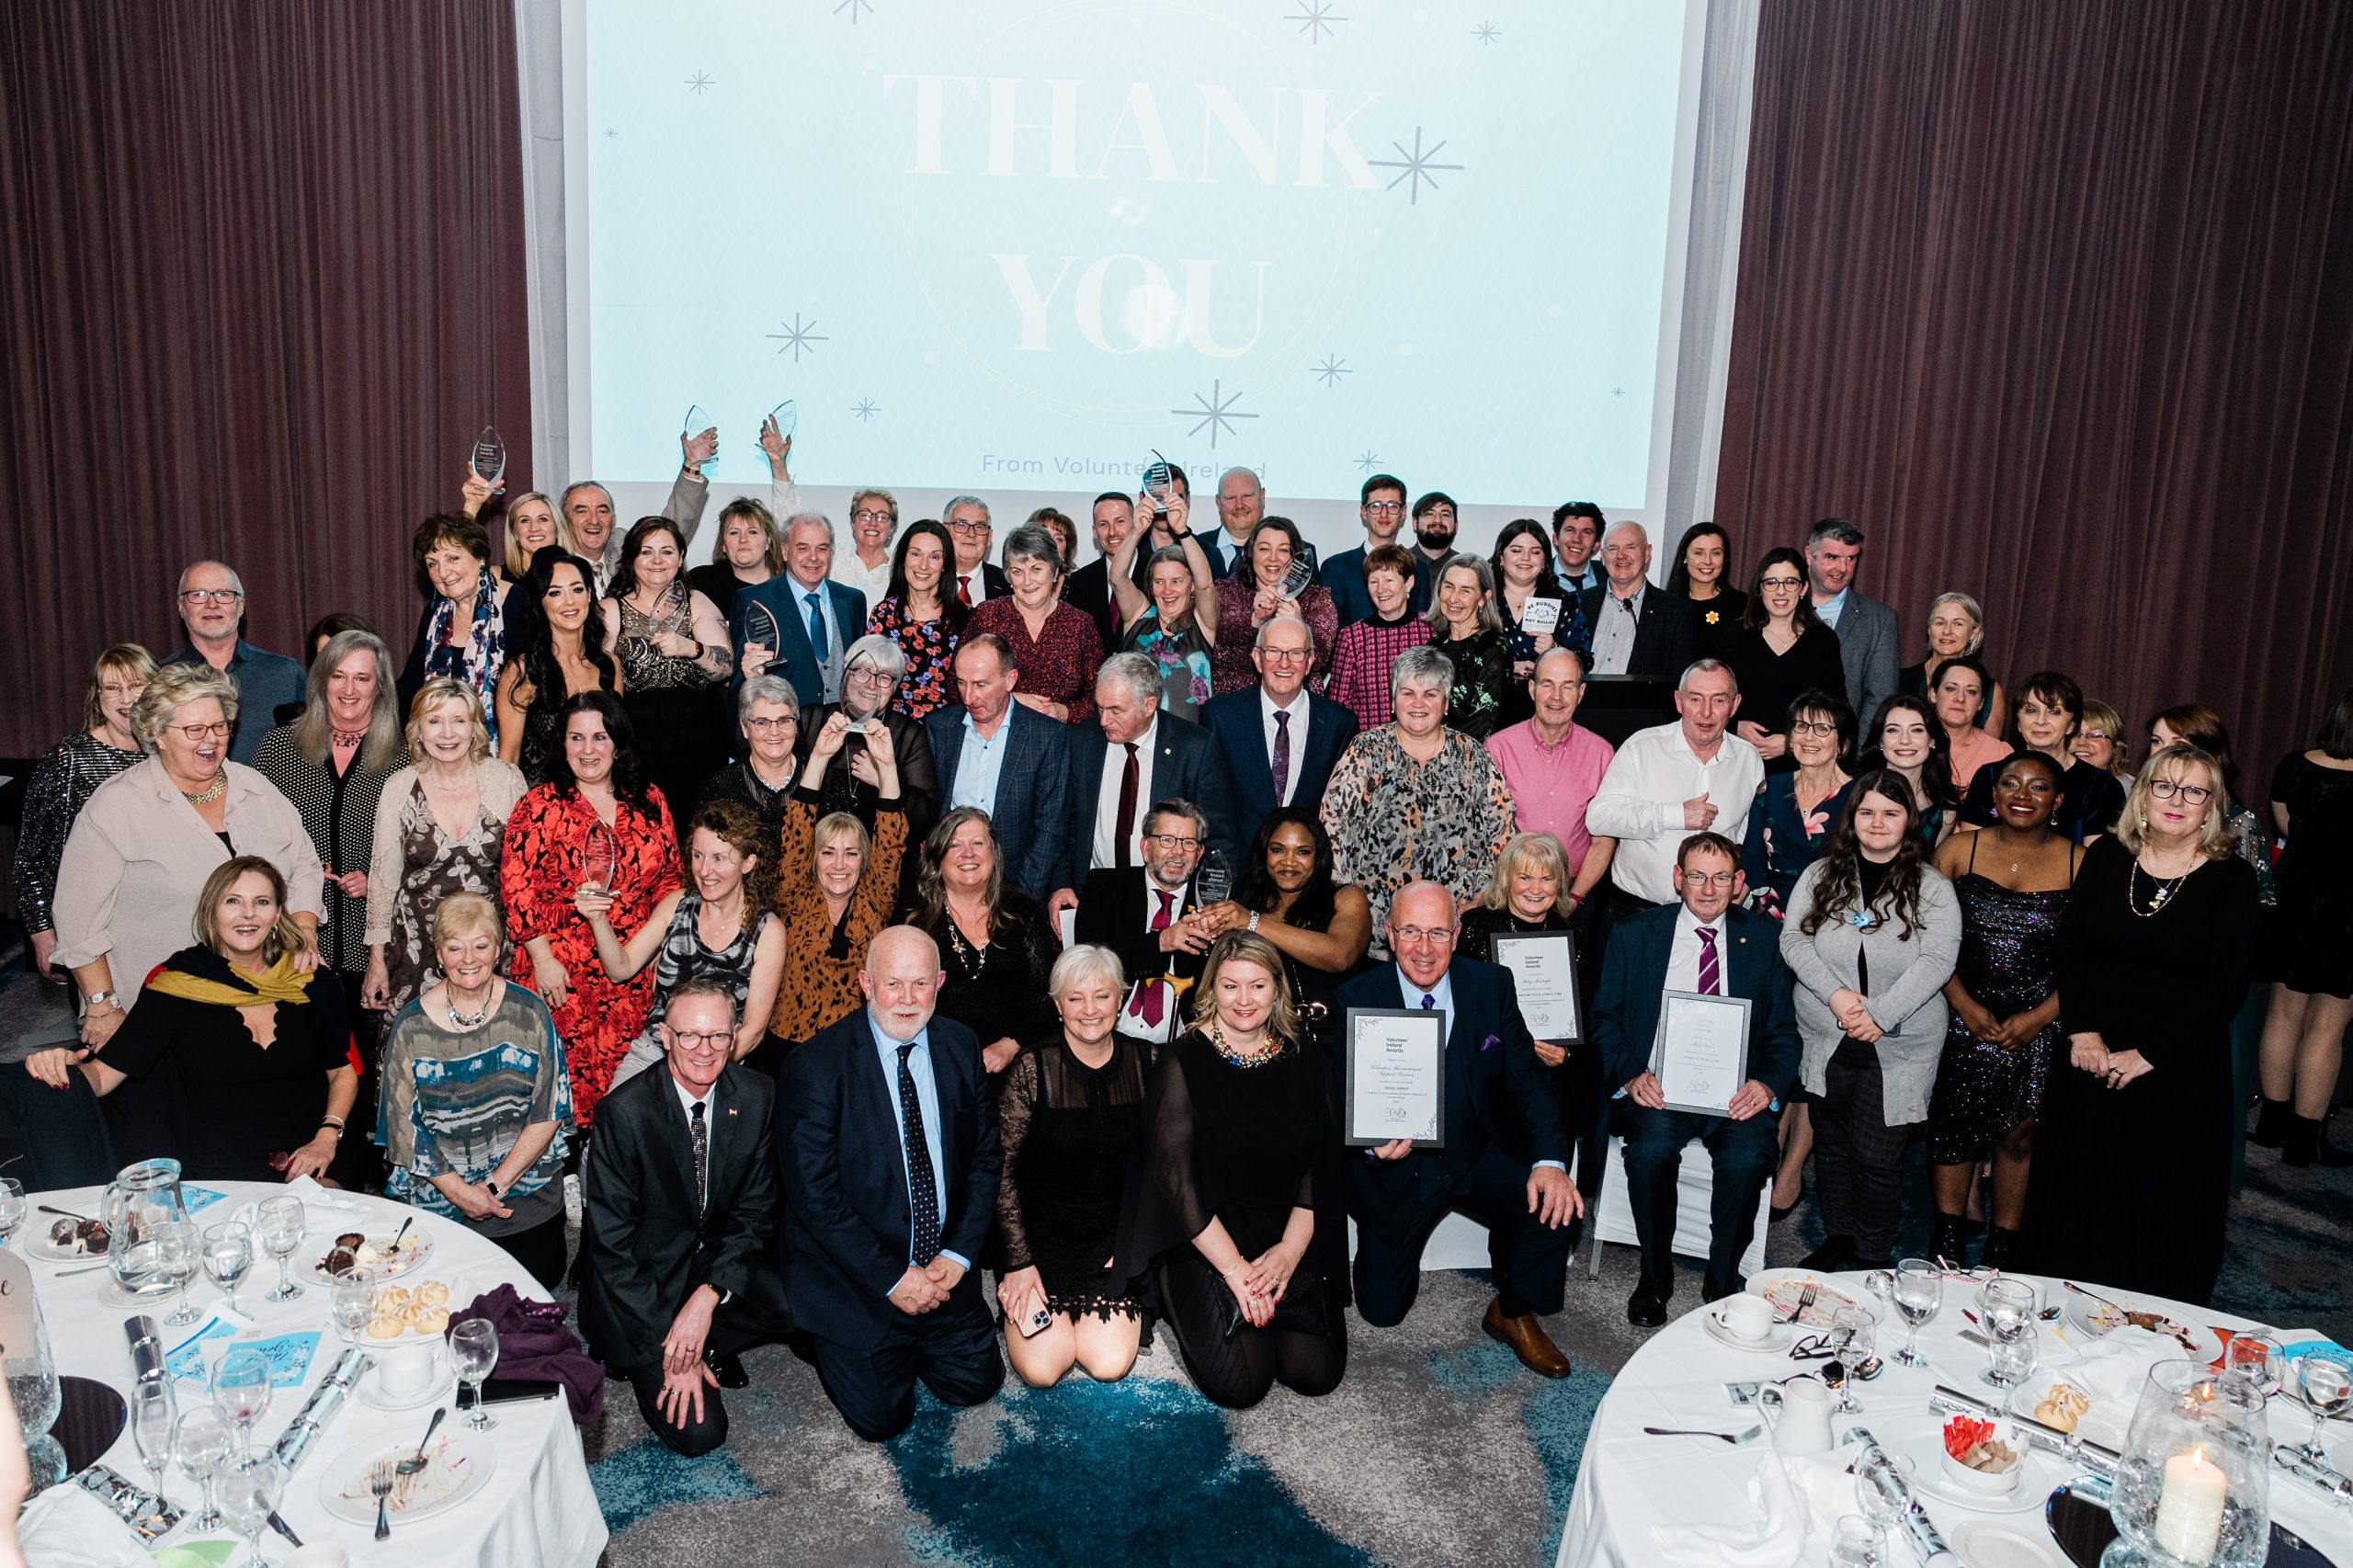 Group ohoto 50+ people at Volunteer Ireland Awards ceremony